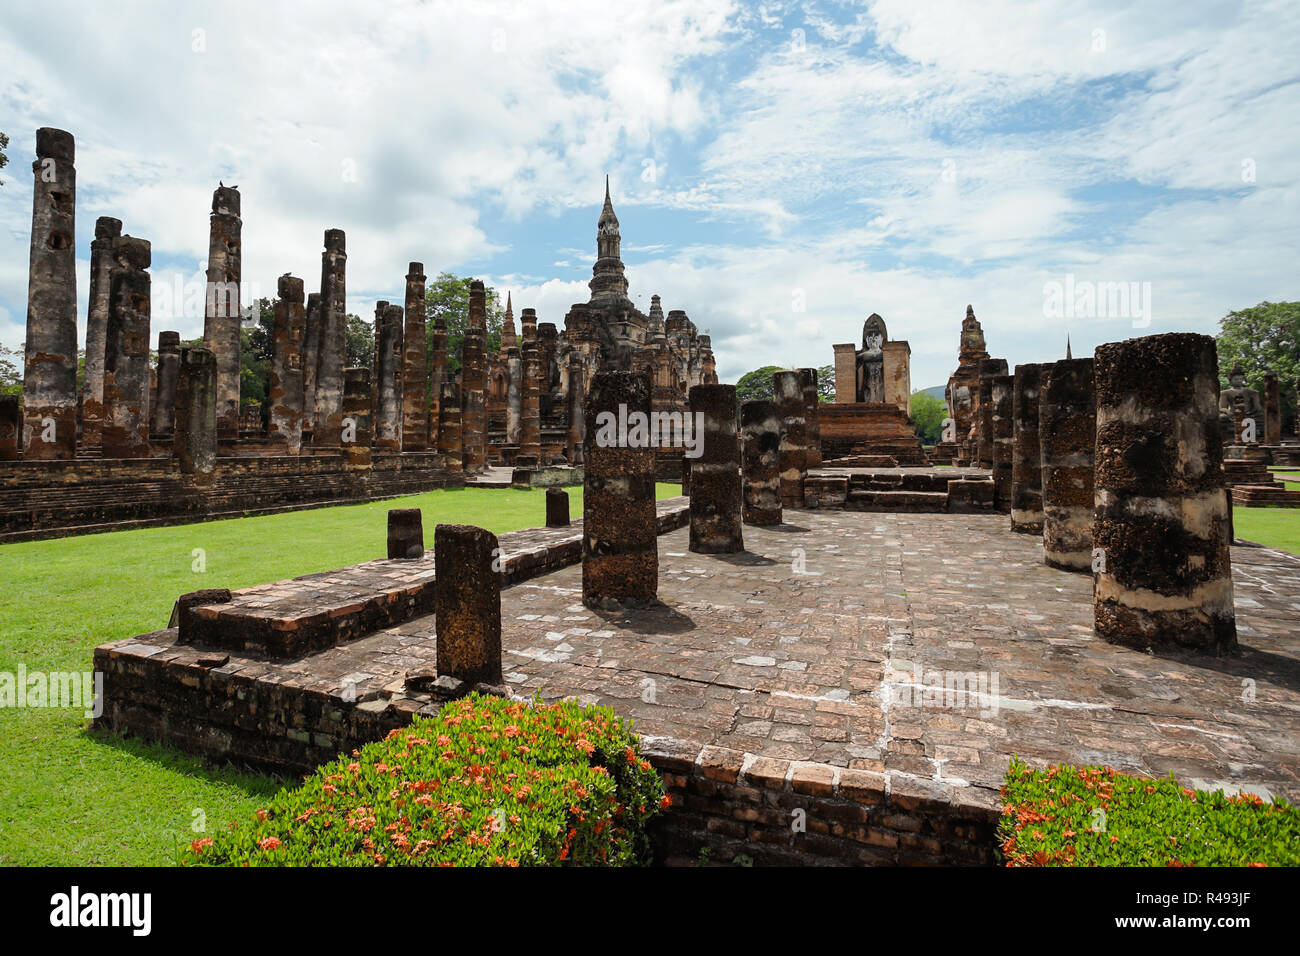 Wat Mahathat or Mahathat Temple in Sukhothai Historical Park, Sukhothai Province, Thailand. Stock Photo